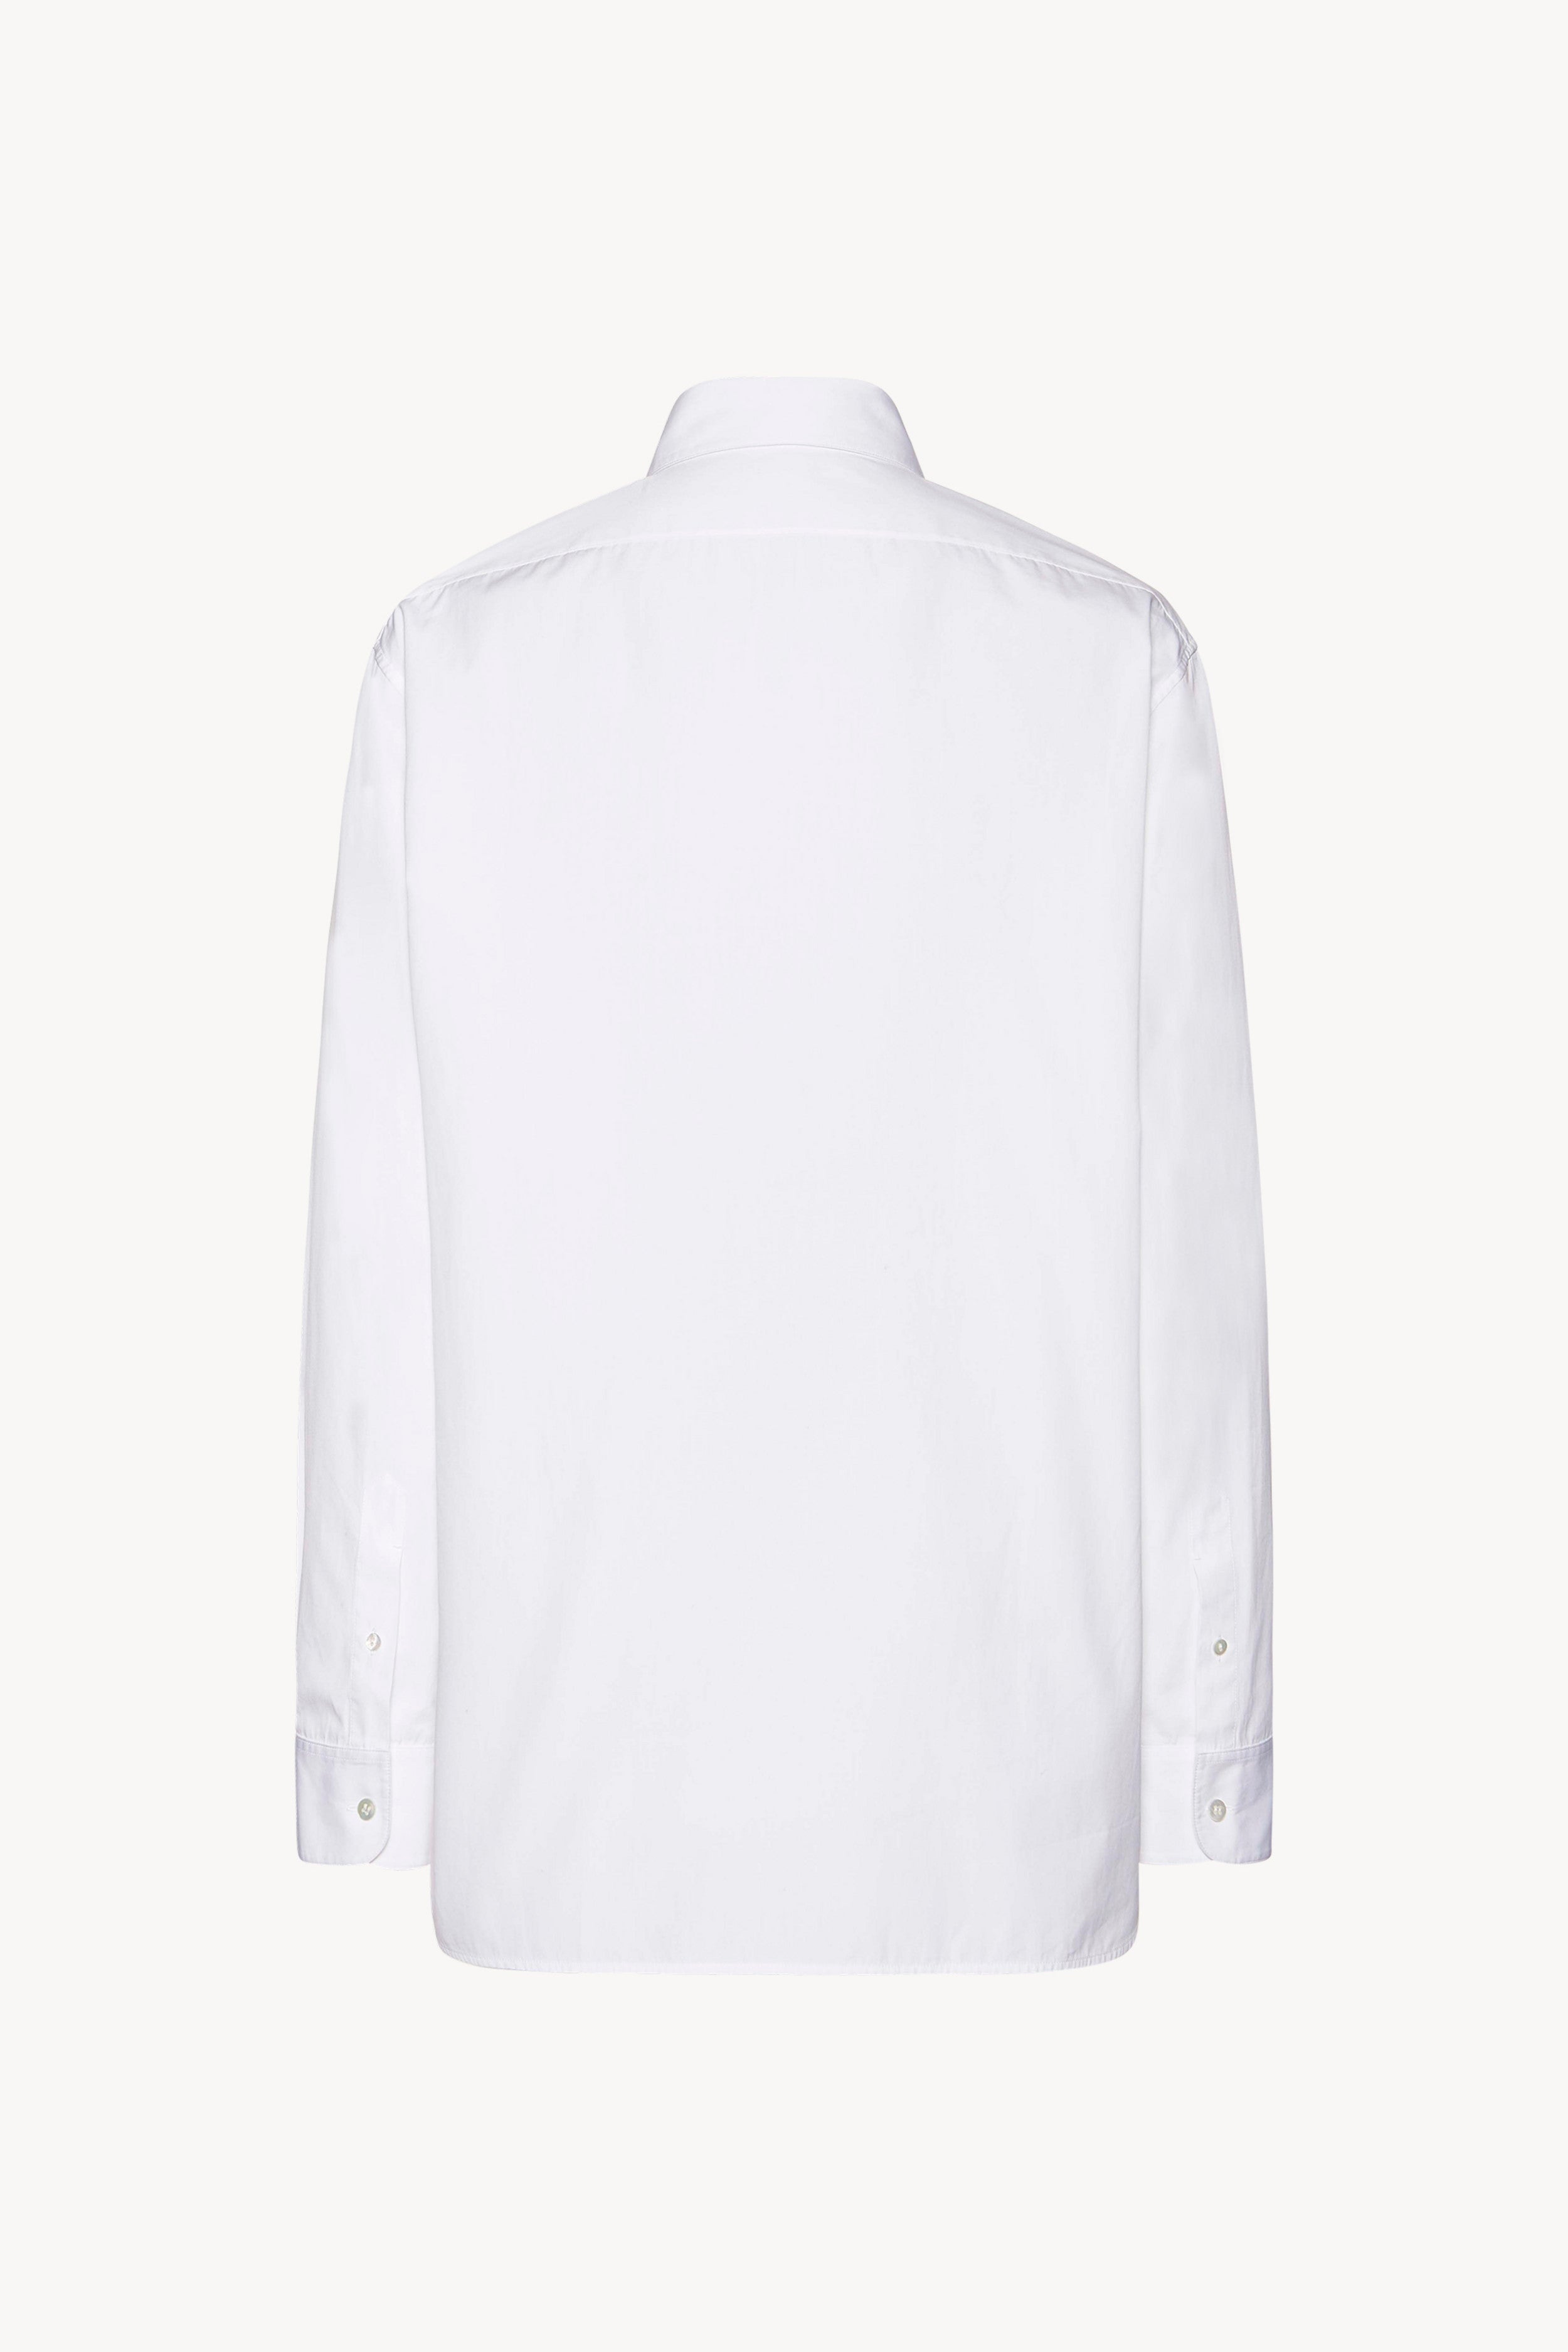 Sisilia Shirt in Cotton - 2